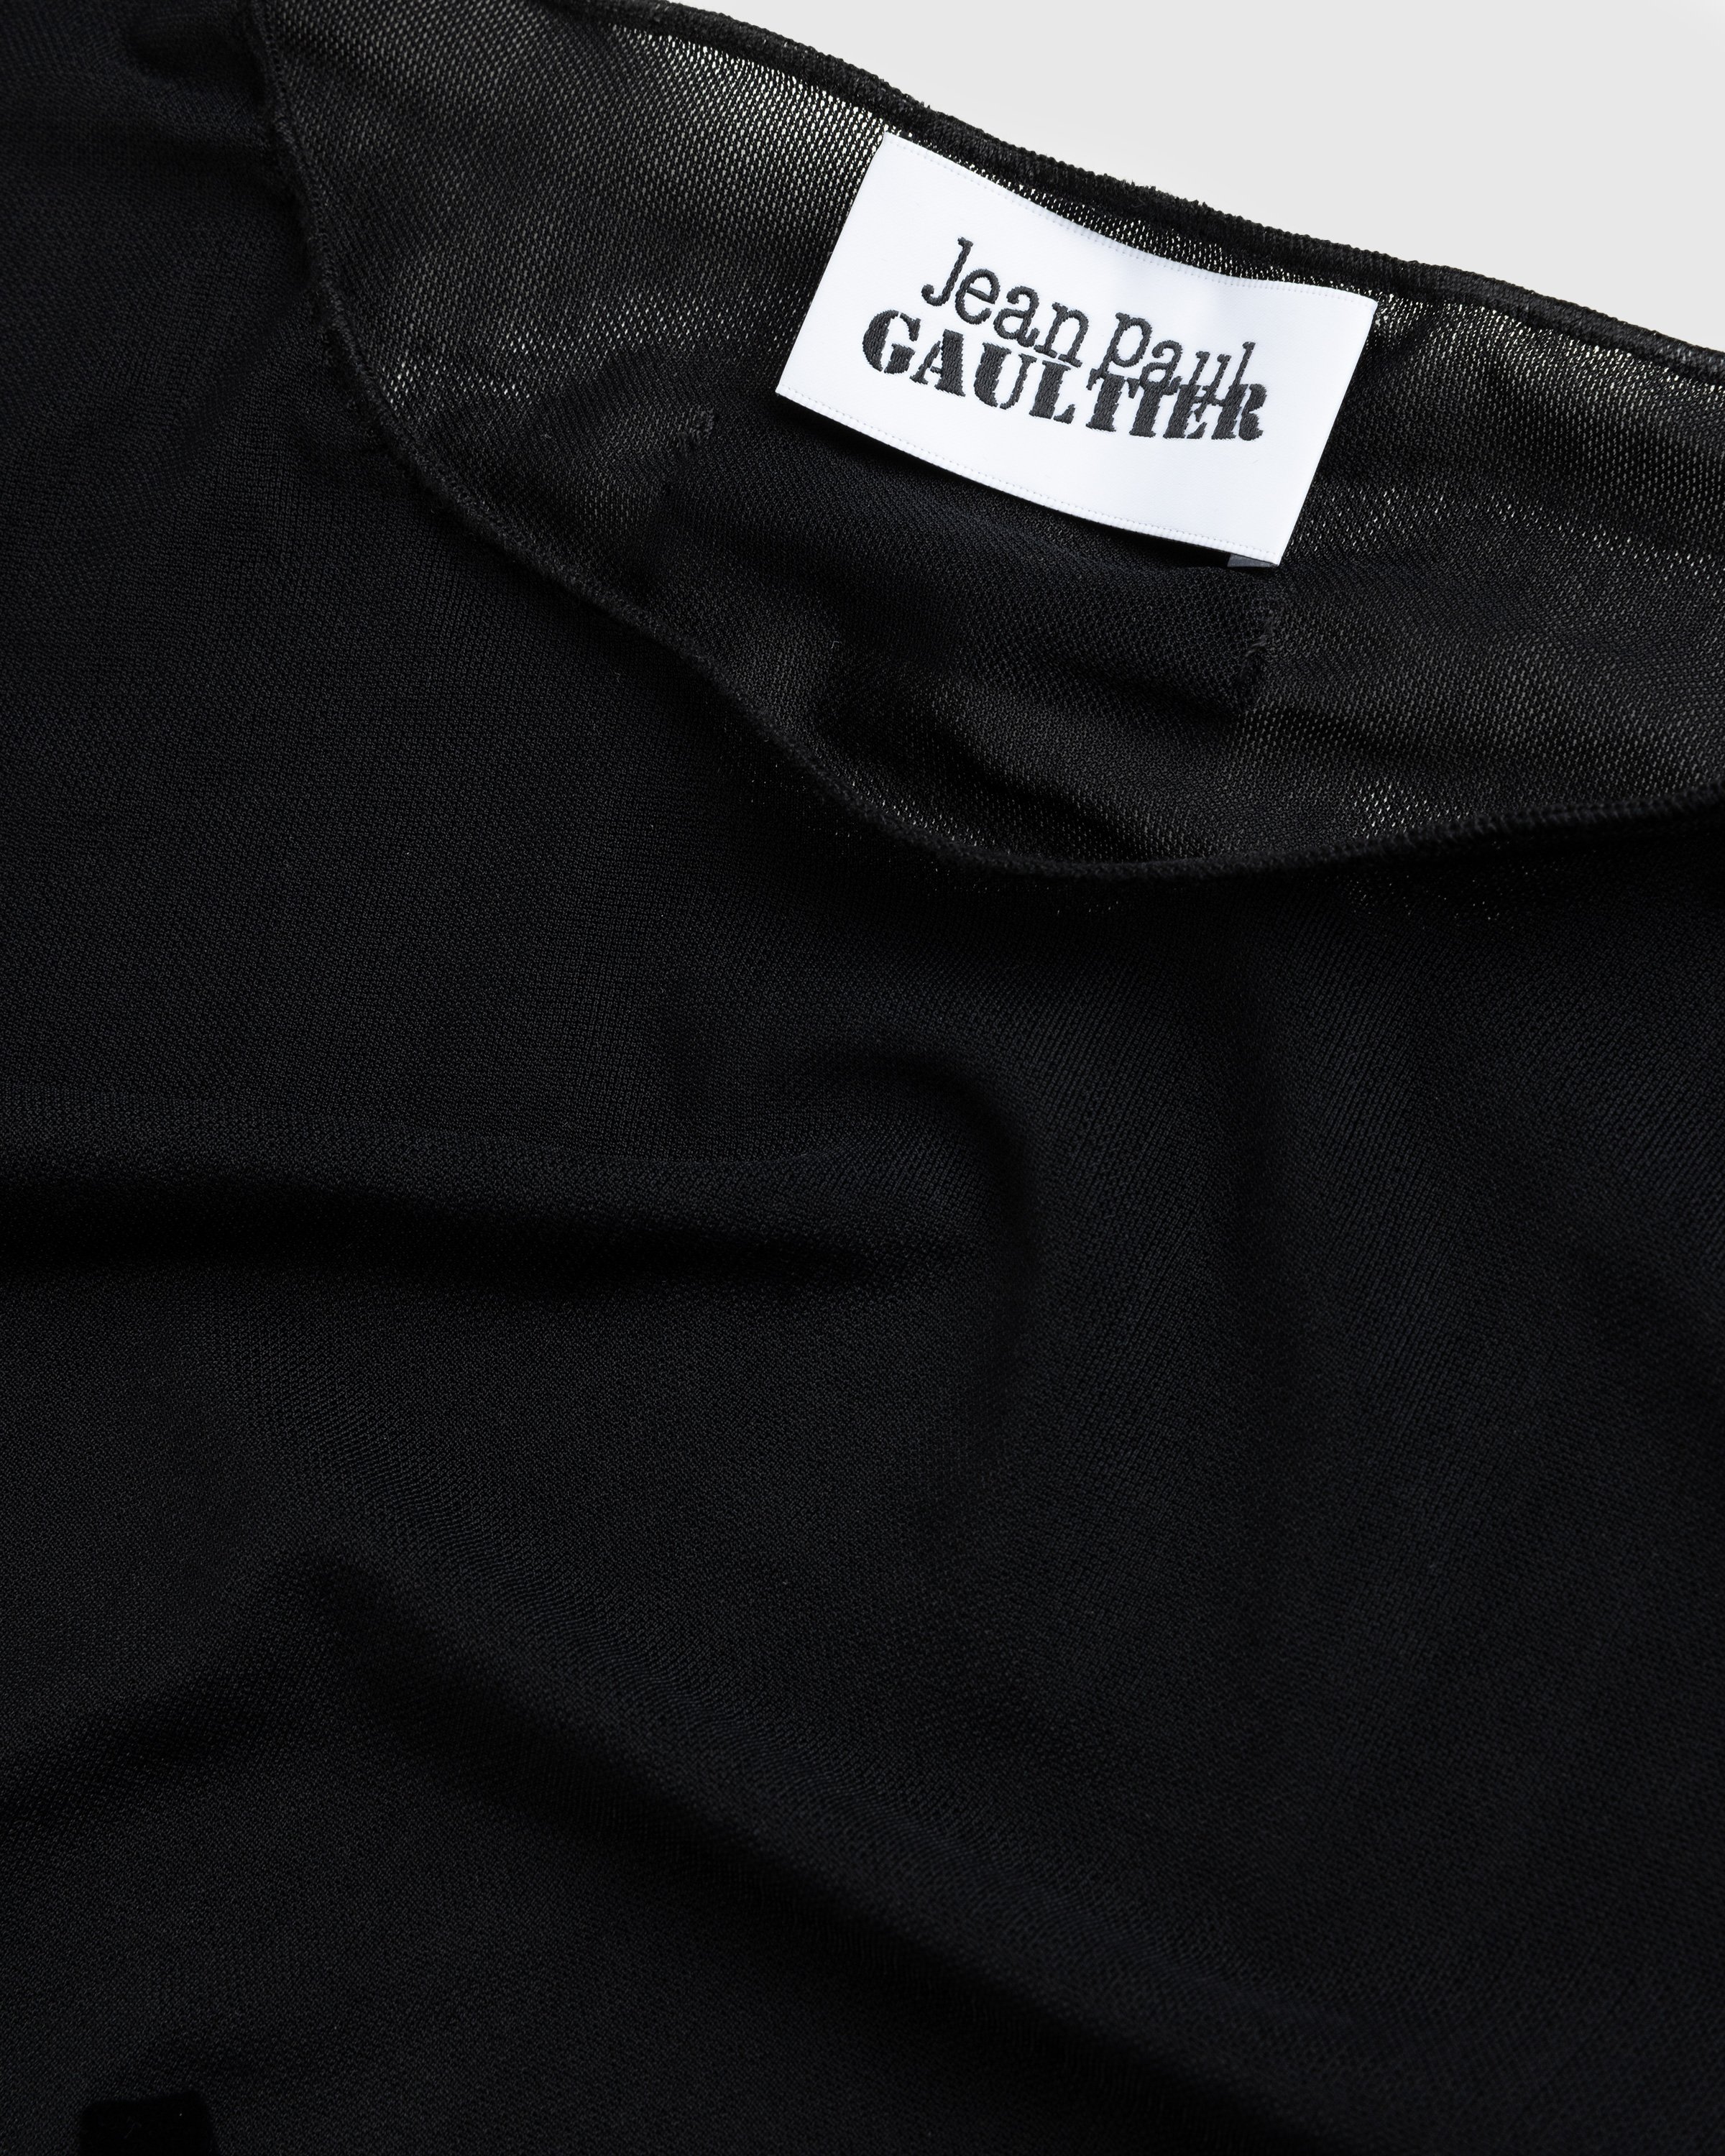 Jean Paul Gaultier - Velvet Gaultier Long-Sleeve Black - Clothing - Black - Image 7